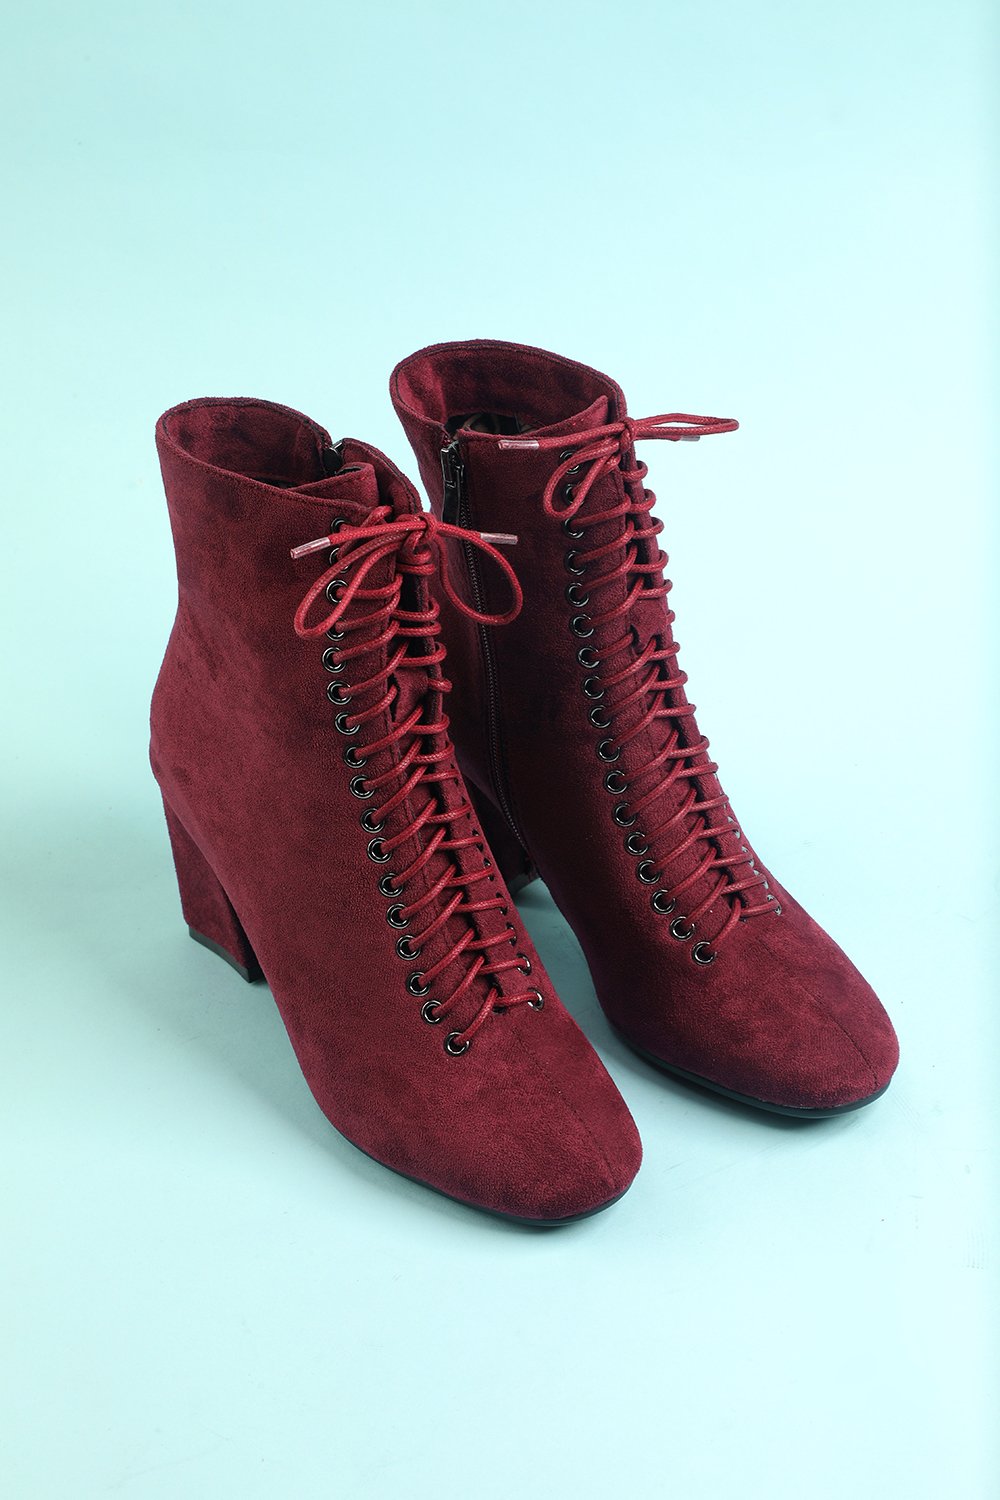 Women's Burgundy Martin Boots